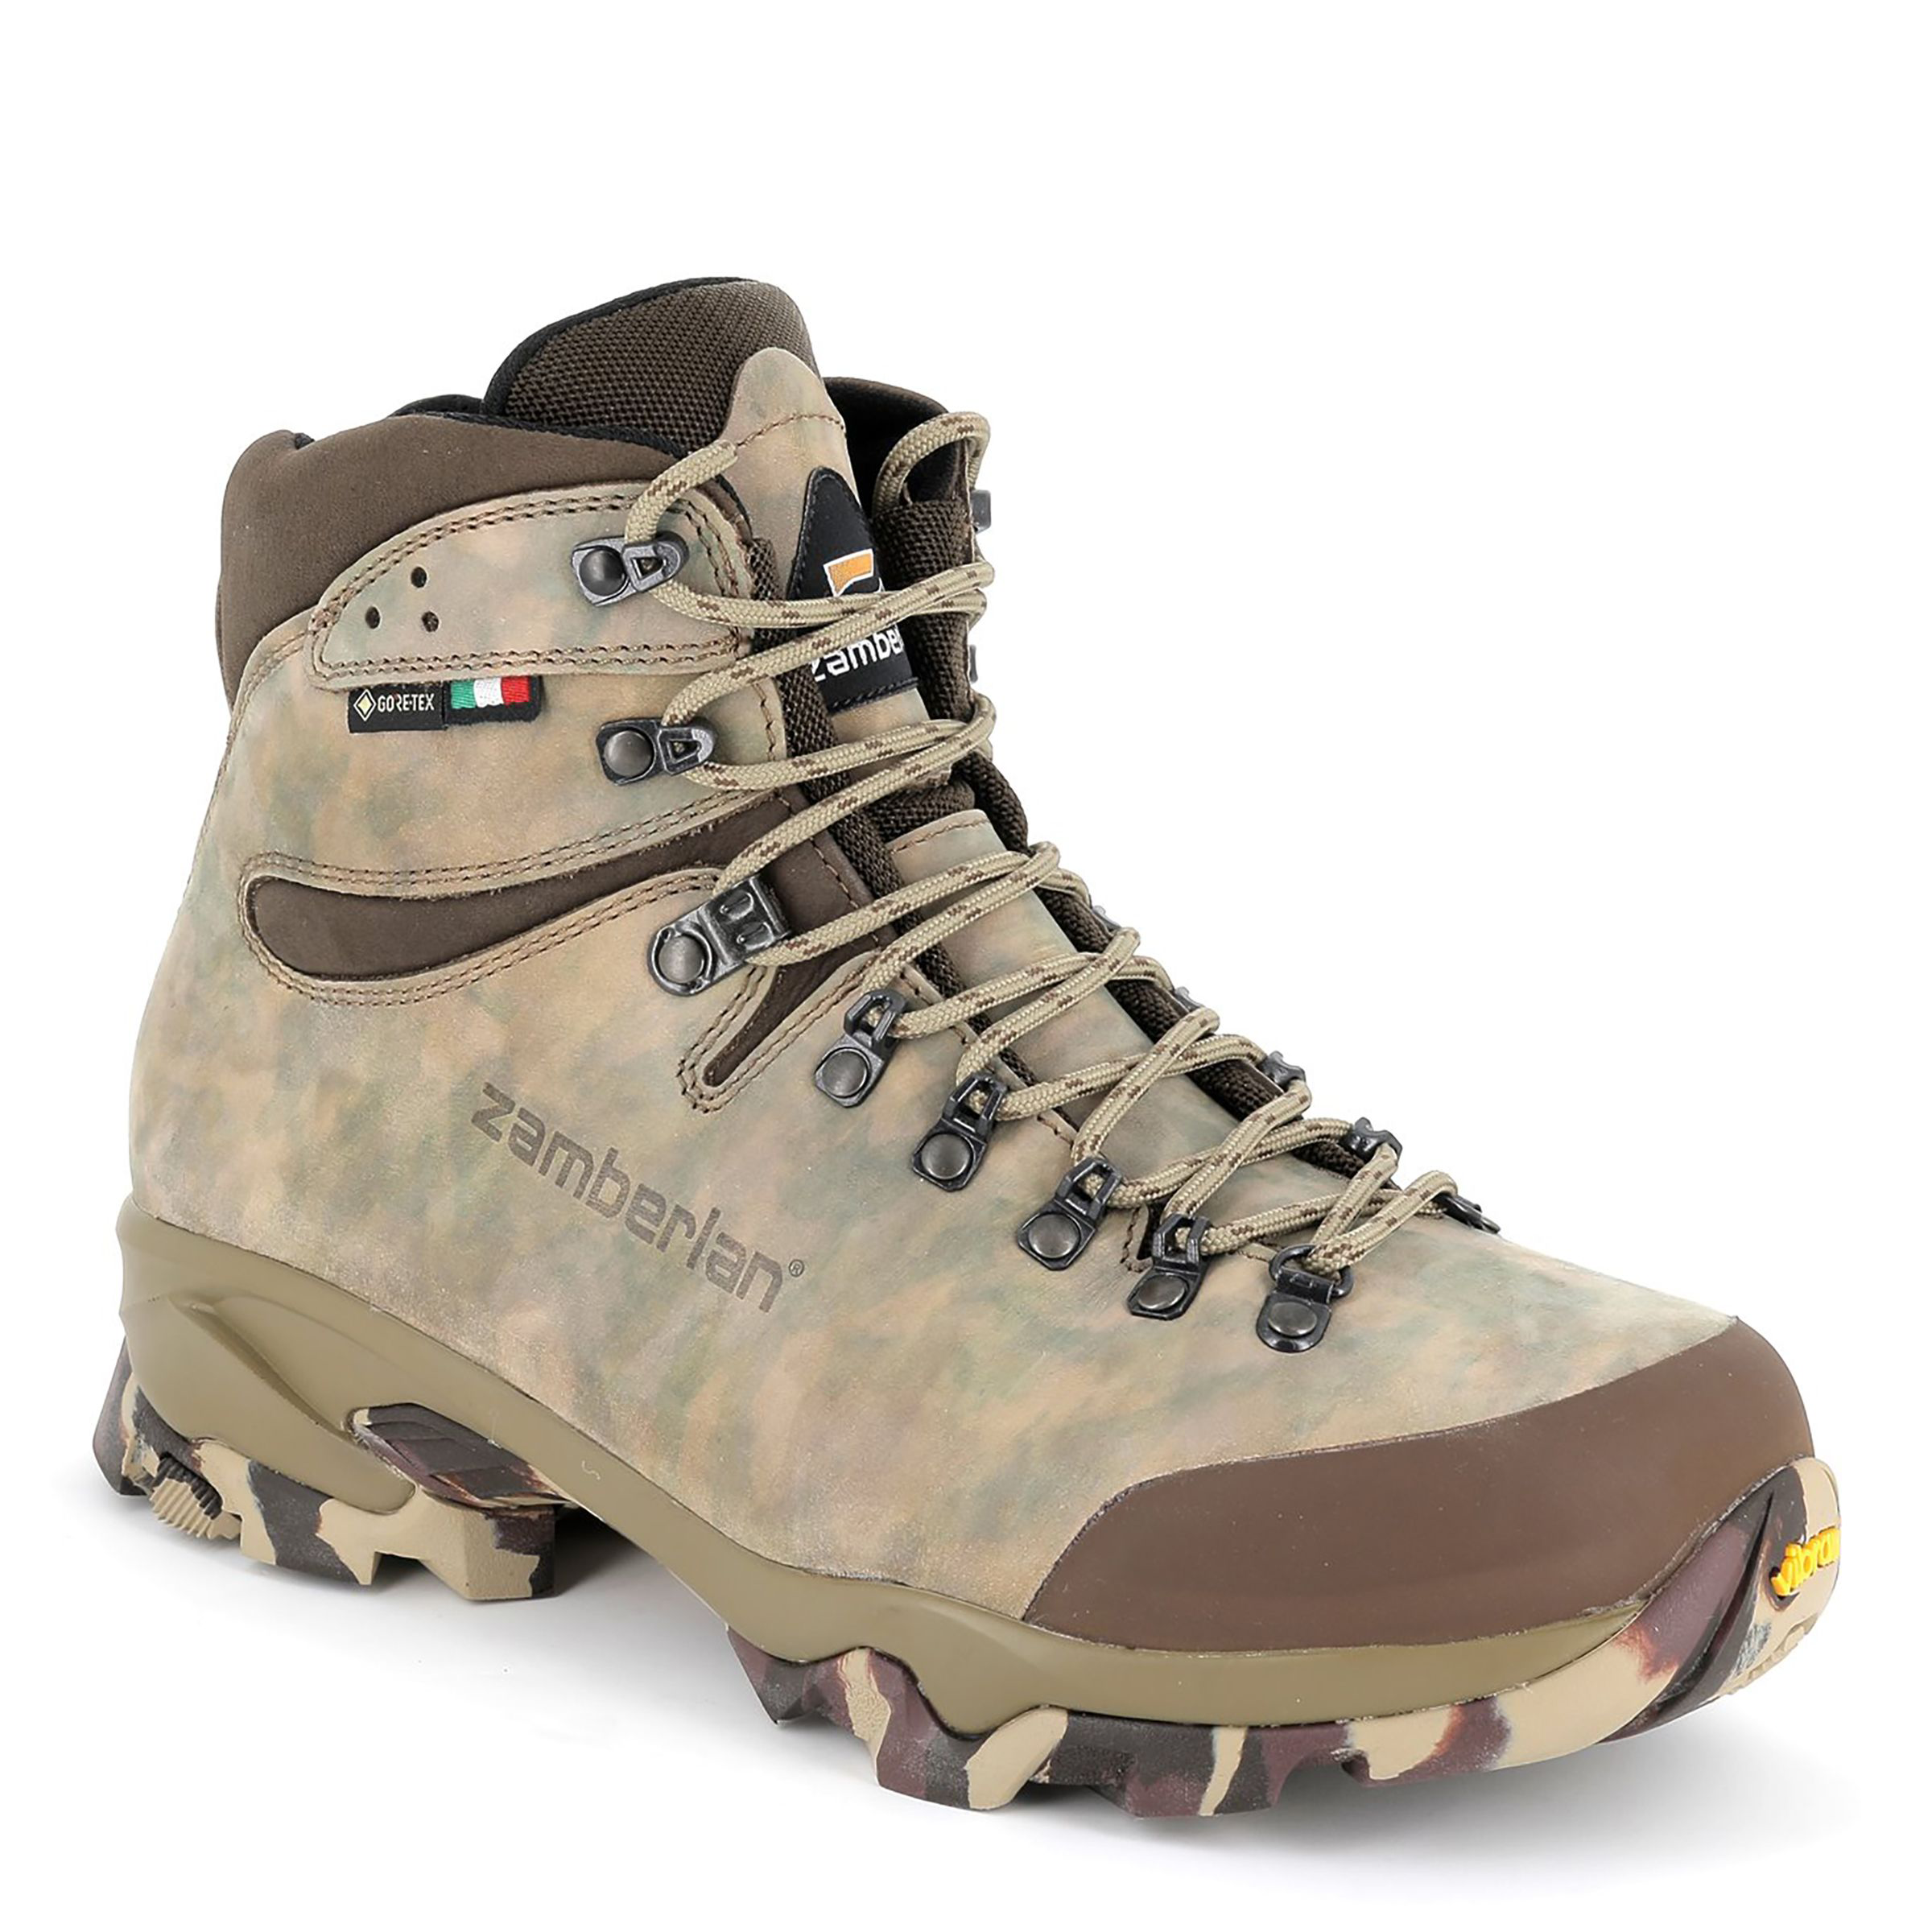 Zamberlan 1213 Leopard GTX RR GORE-TEX Hunting Boots for Men - Beige - 9.5W